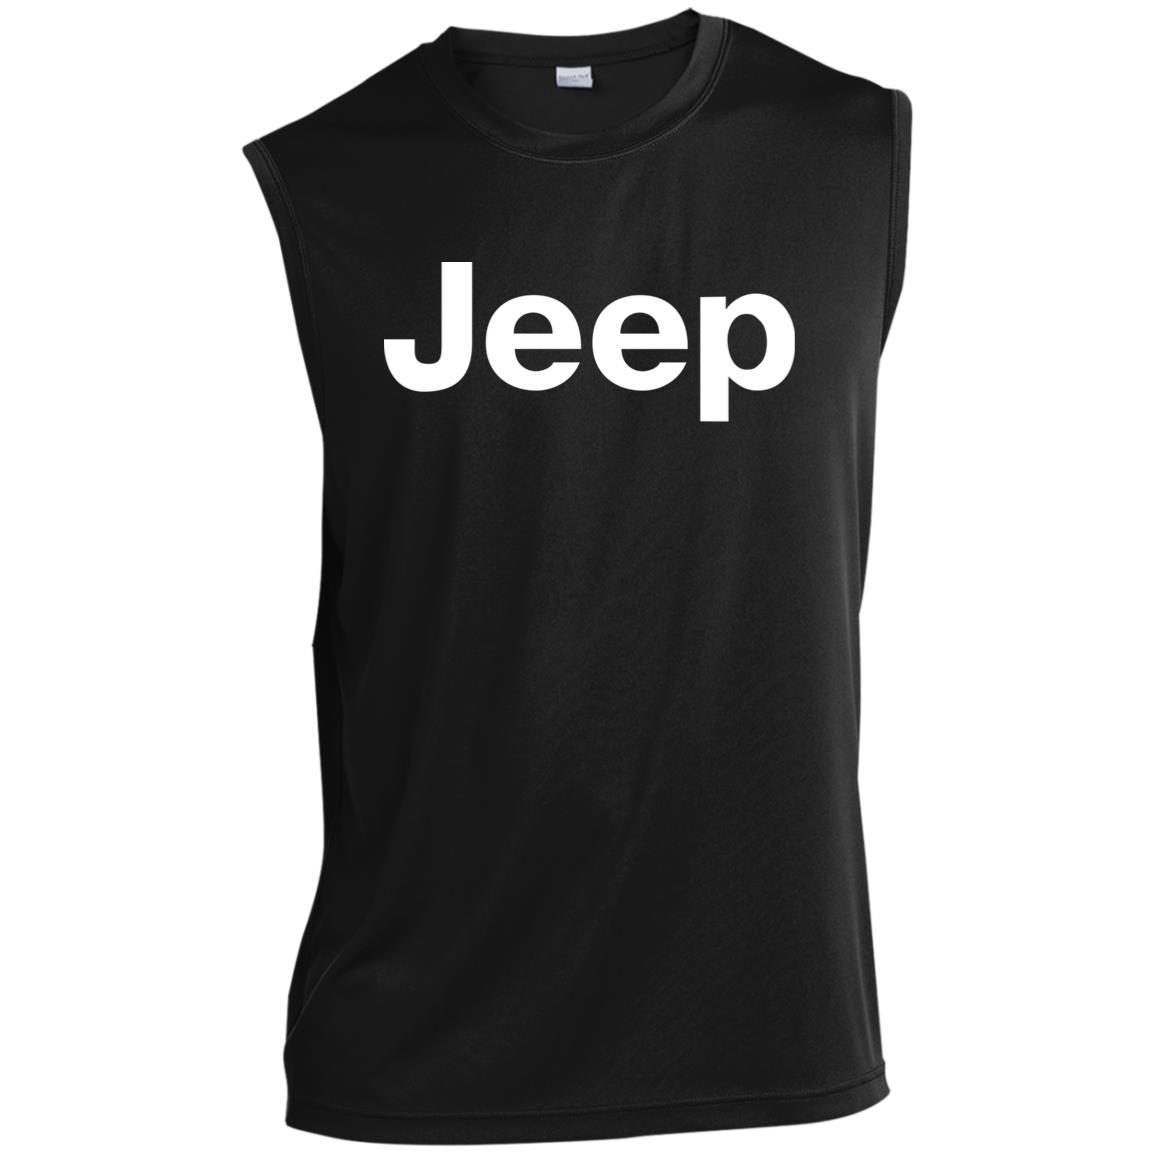 Jeep Men’s Sleeveless Performance Tee - My Car My Rules